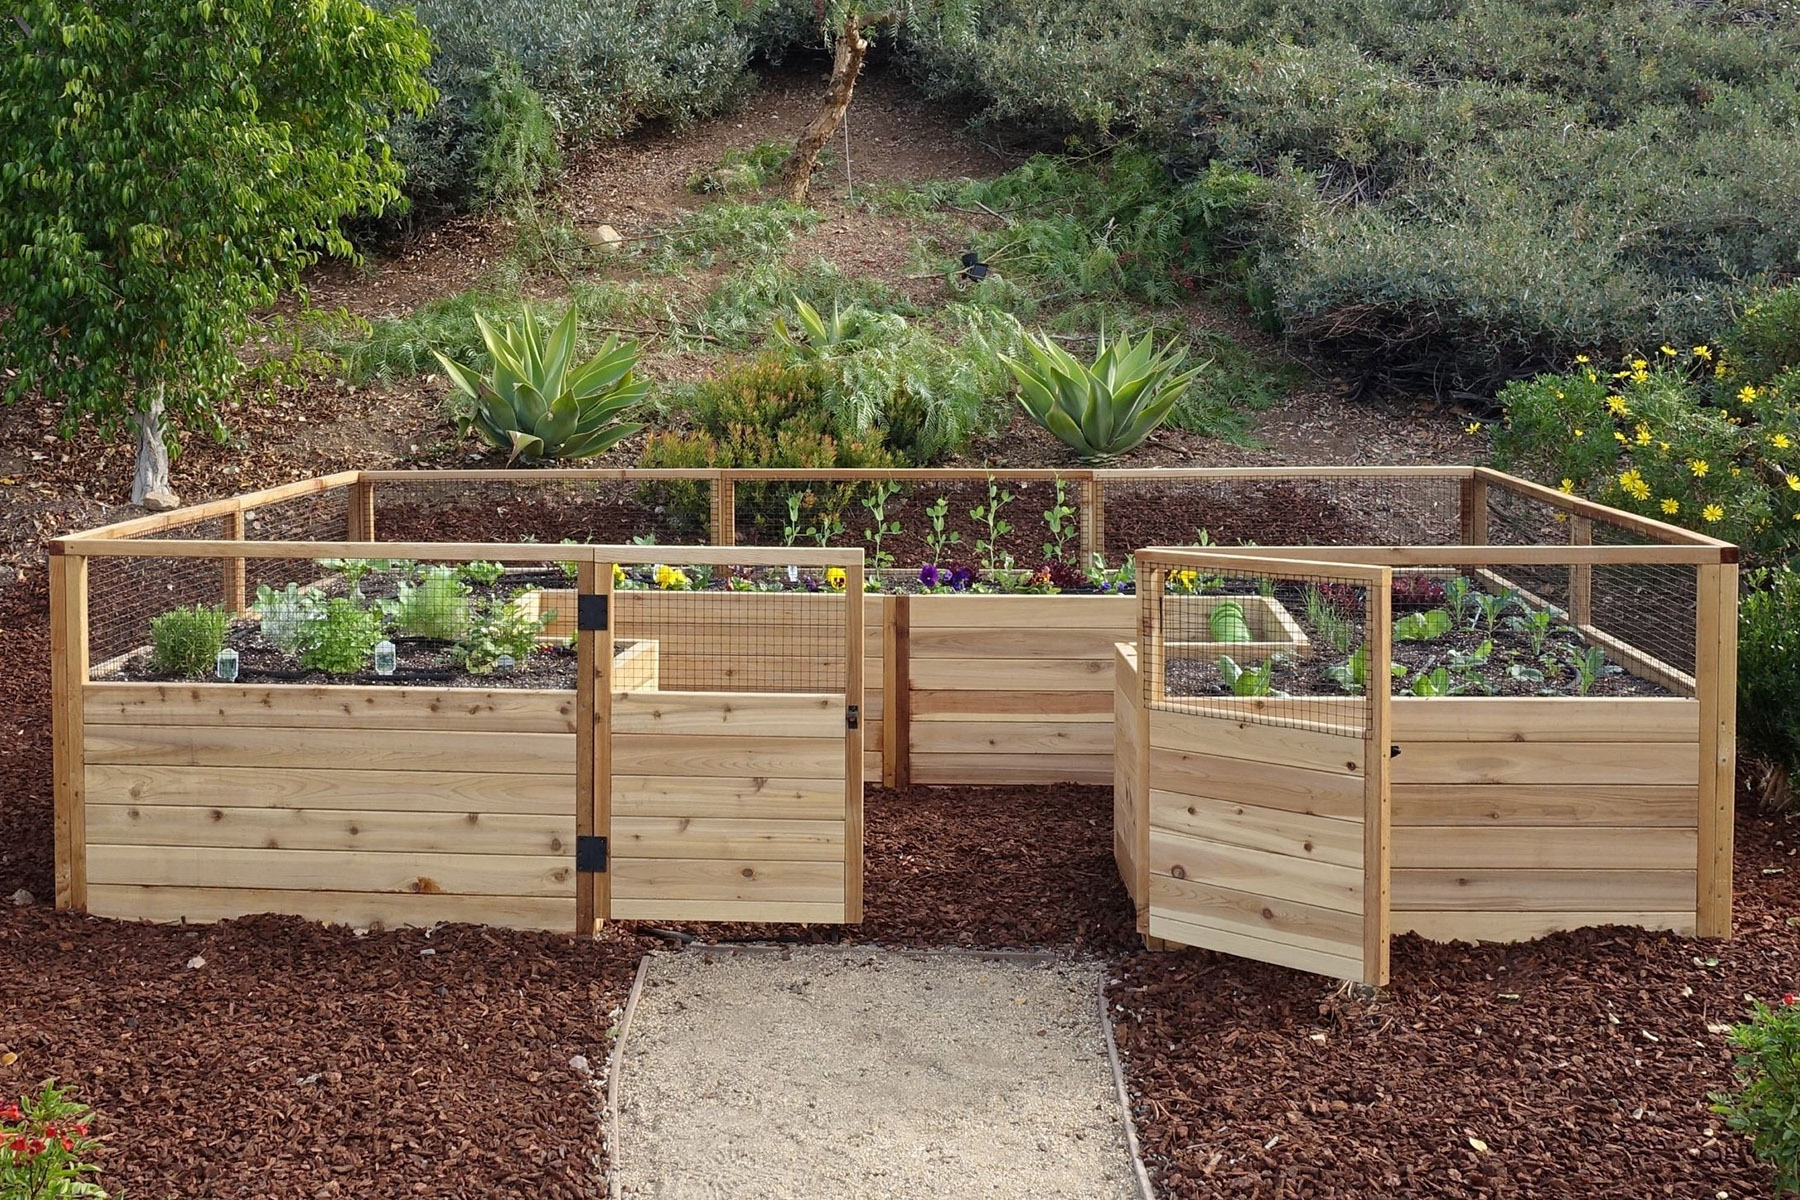 Raised Beds for Vegetable Gardening